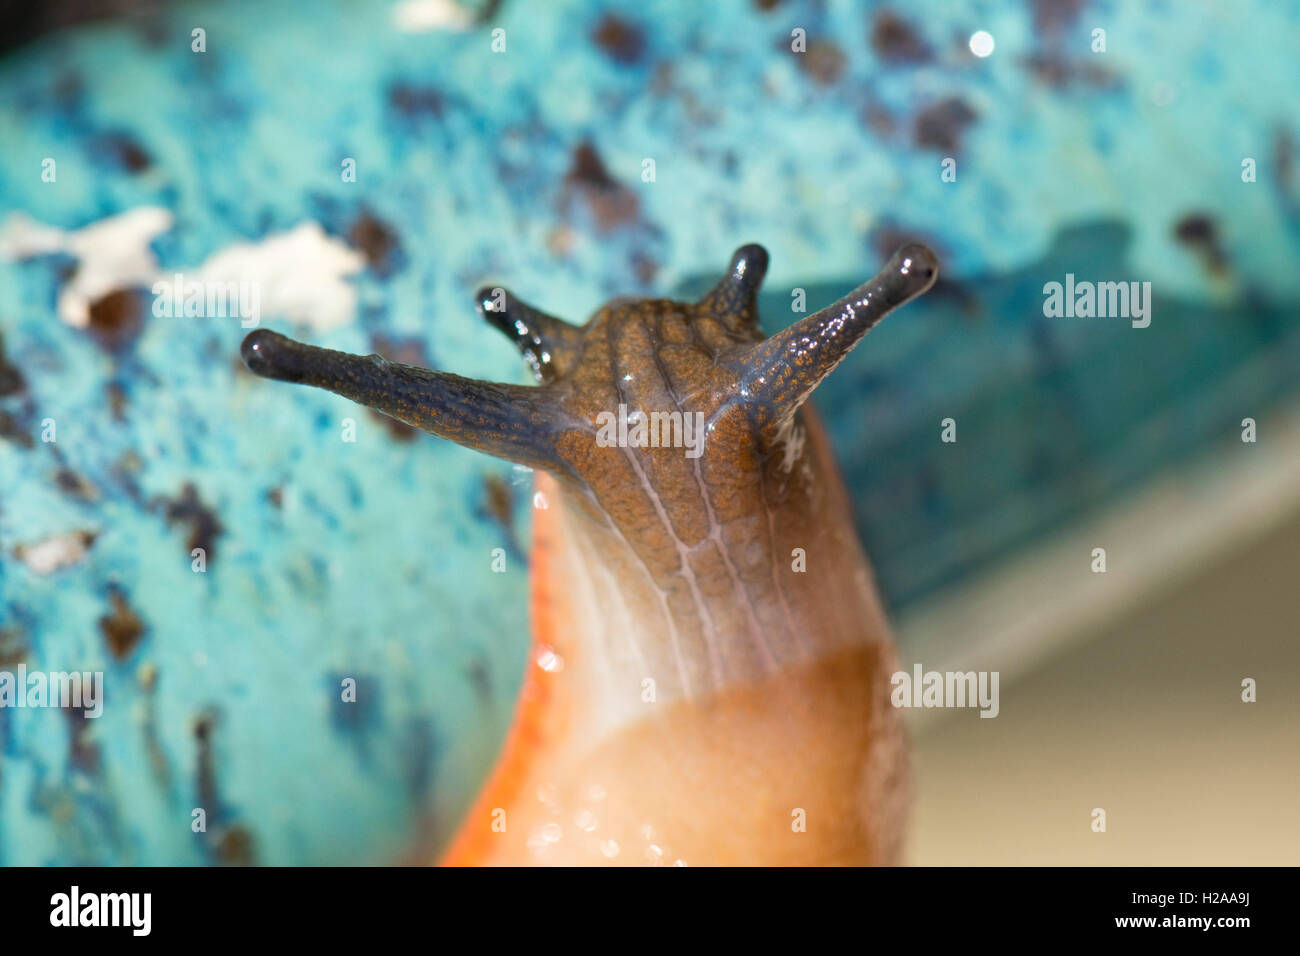 Spanish slug, Arion vulgaris, beige with orange skirt, head  with extended antennae on blue ceramic pot Stock Photo